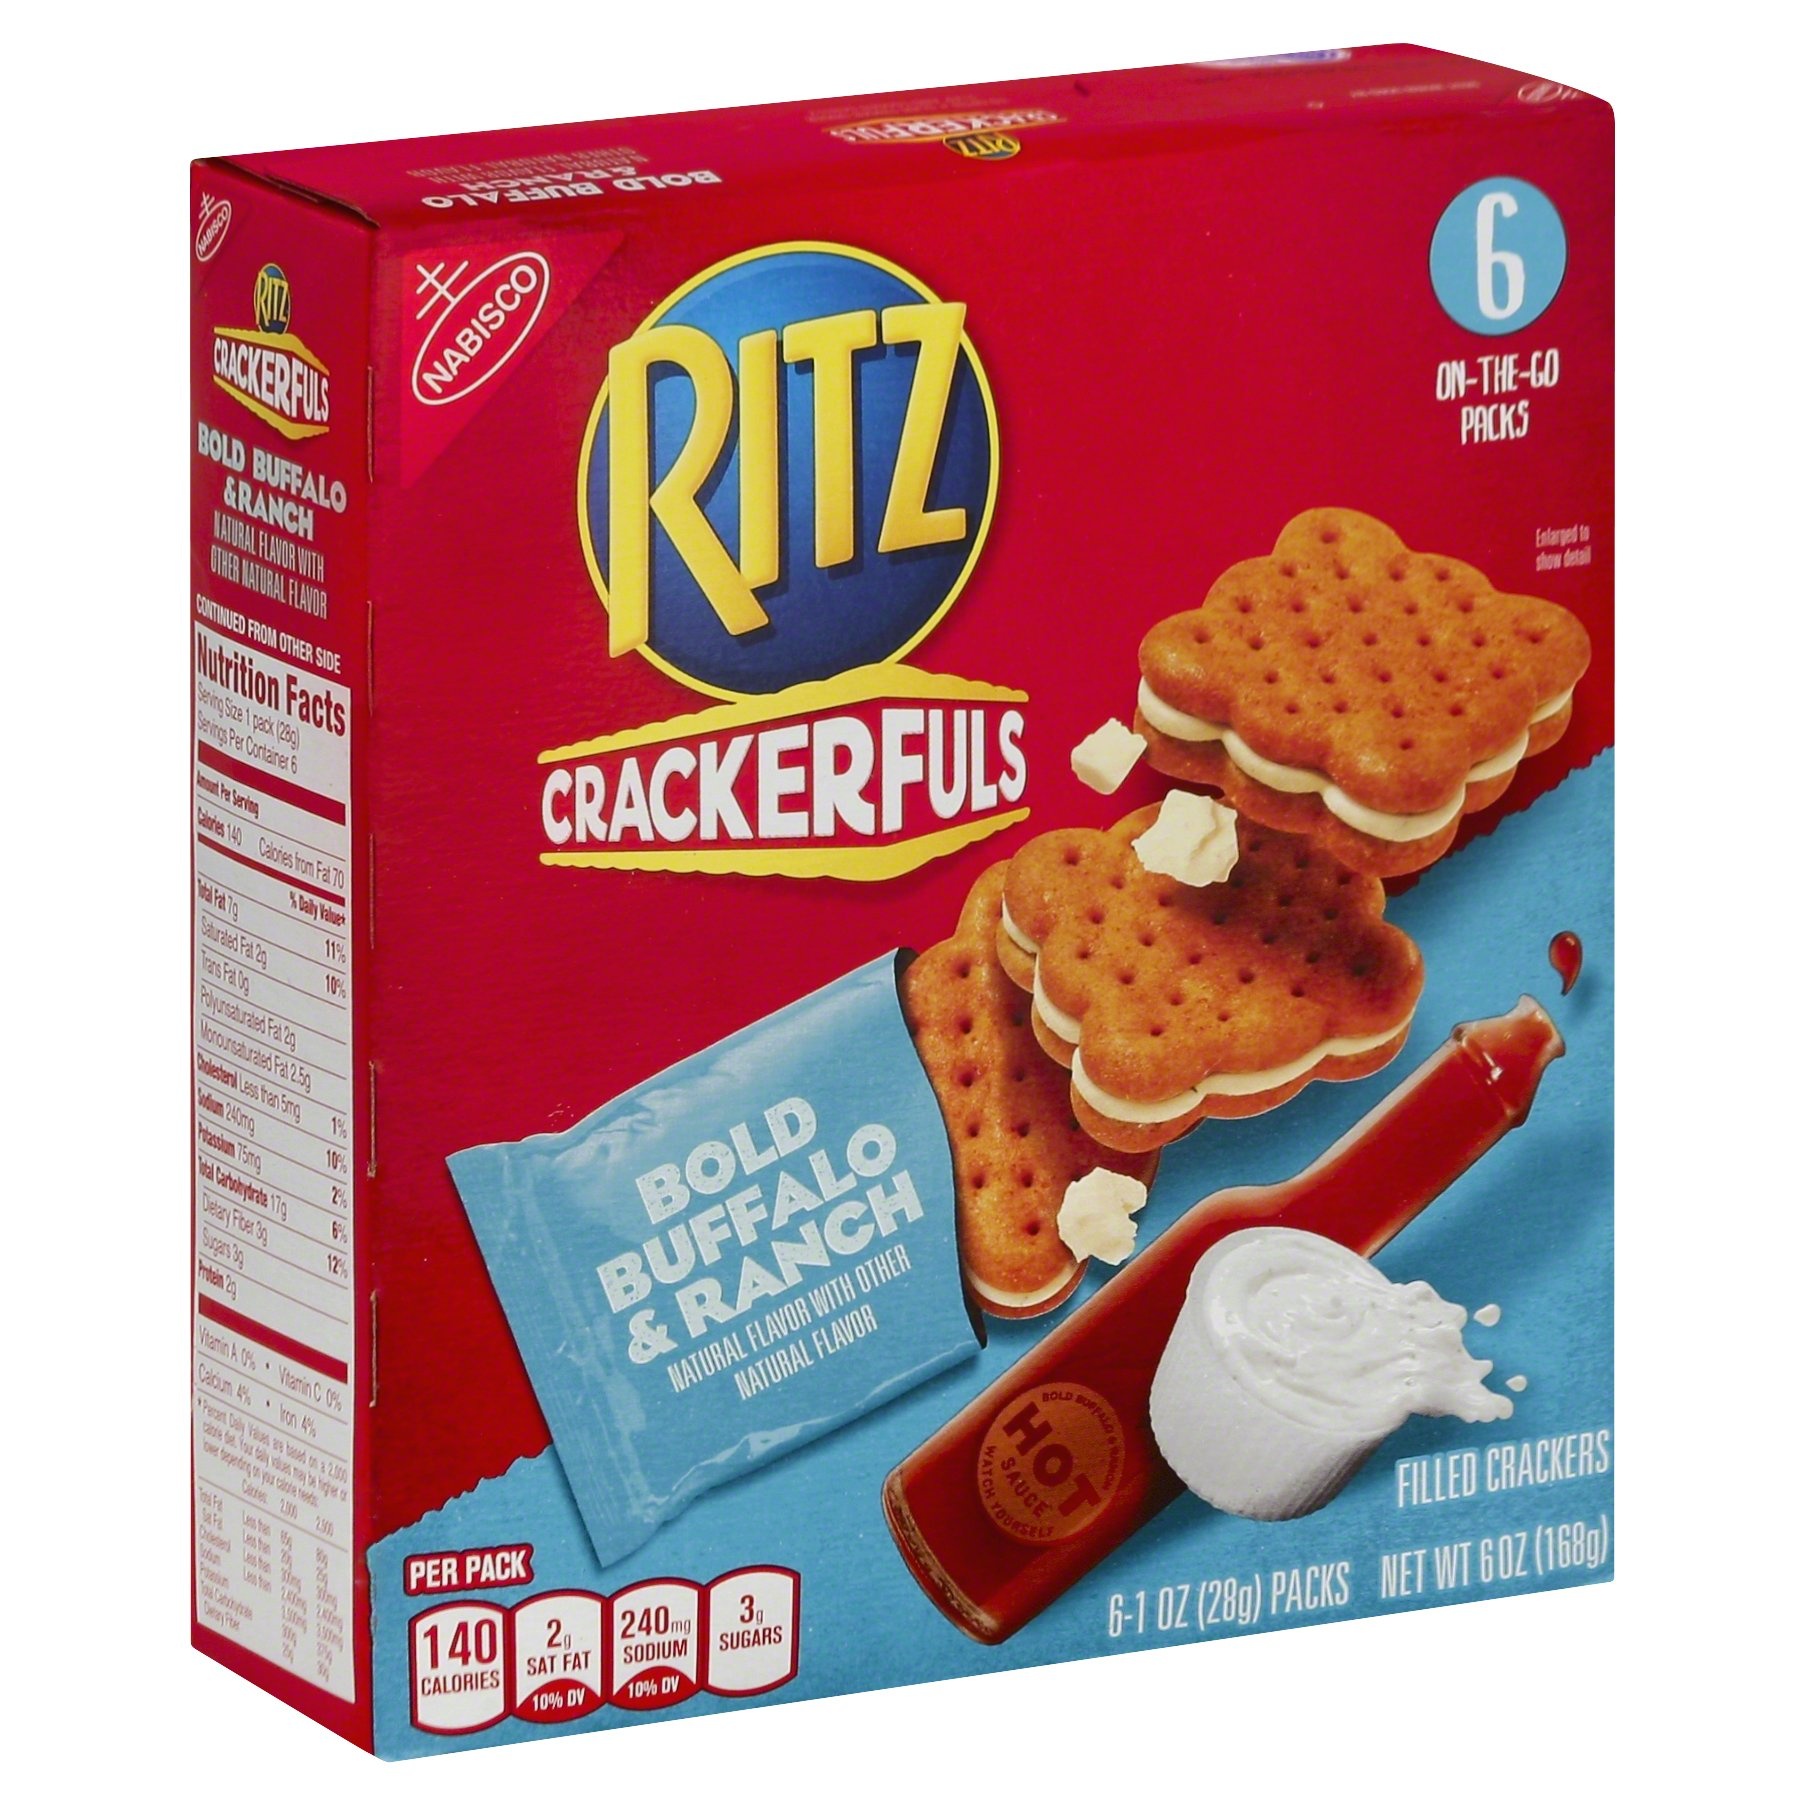 slide 1 of 8, Ritz Crackerfuls Bold Buffalo & Ranch Filled Crackers, 6 oz